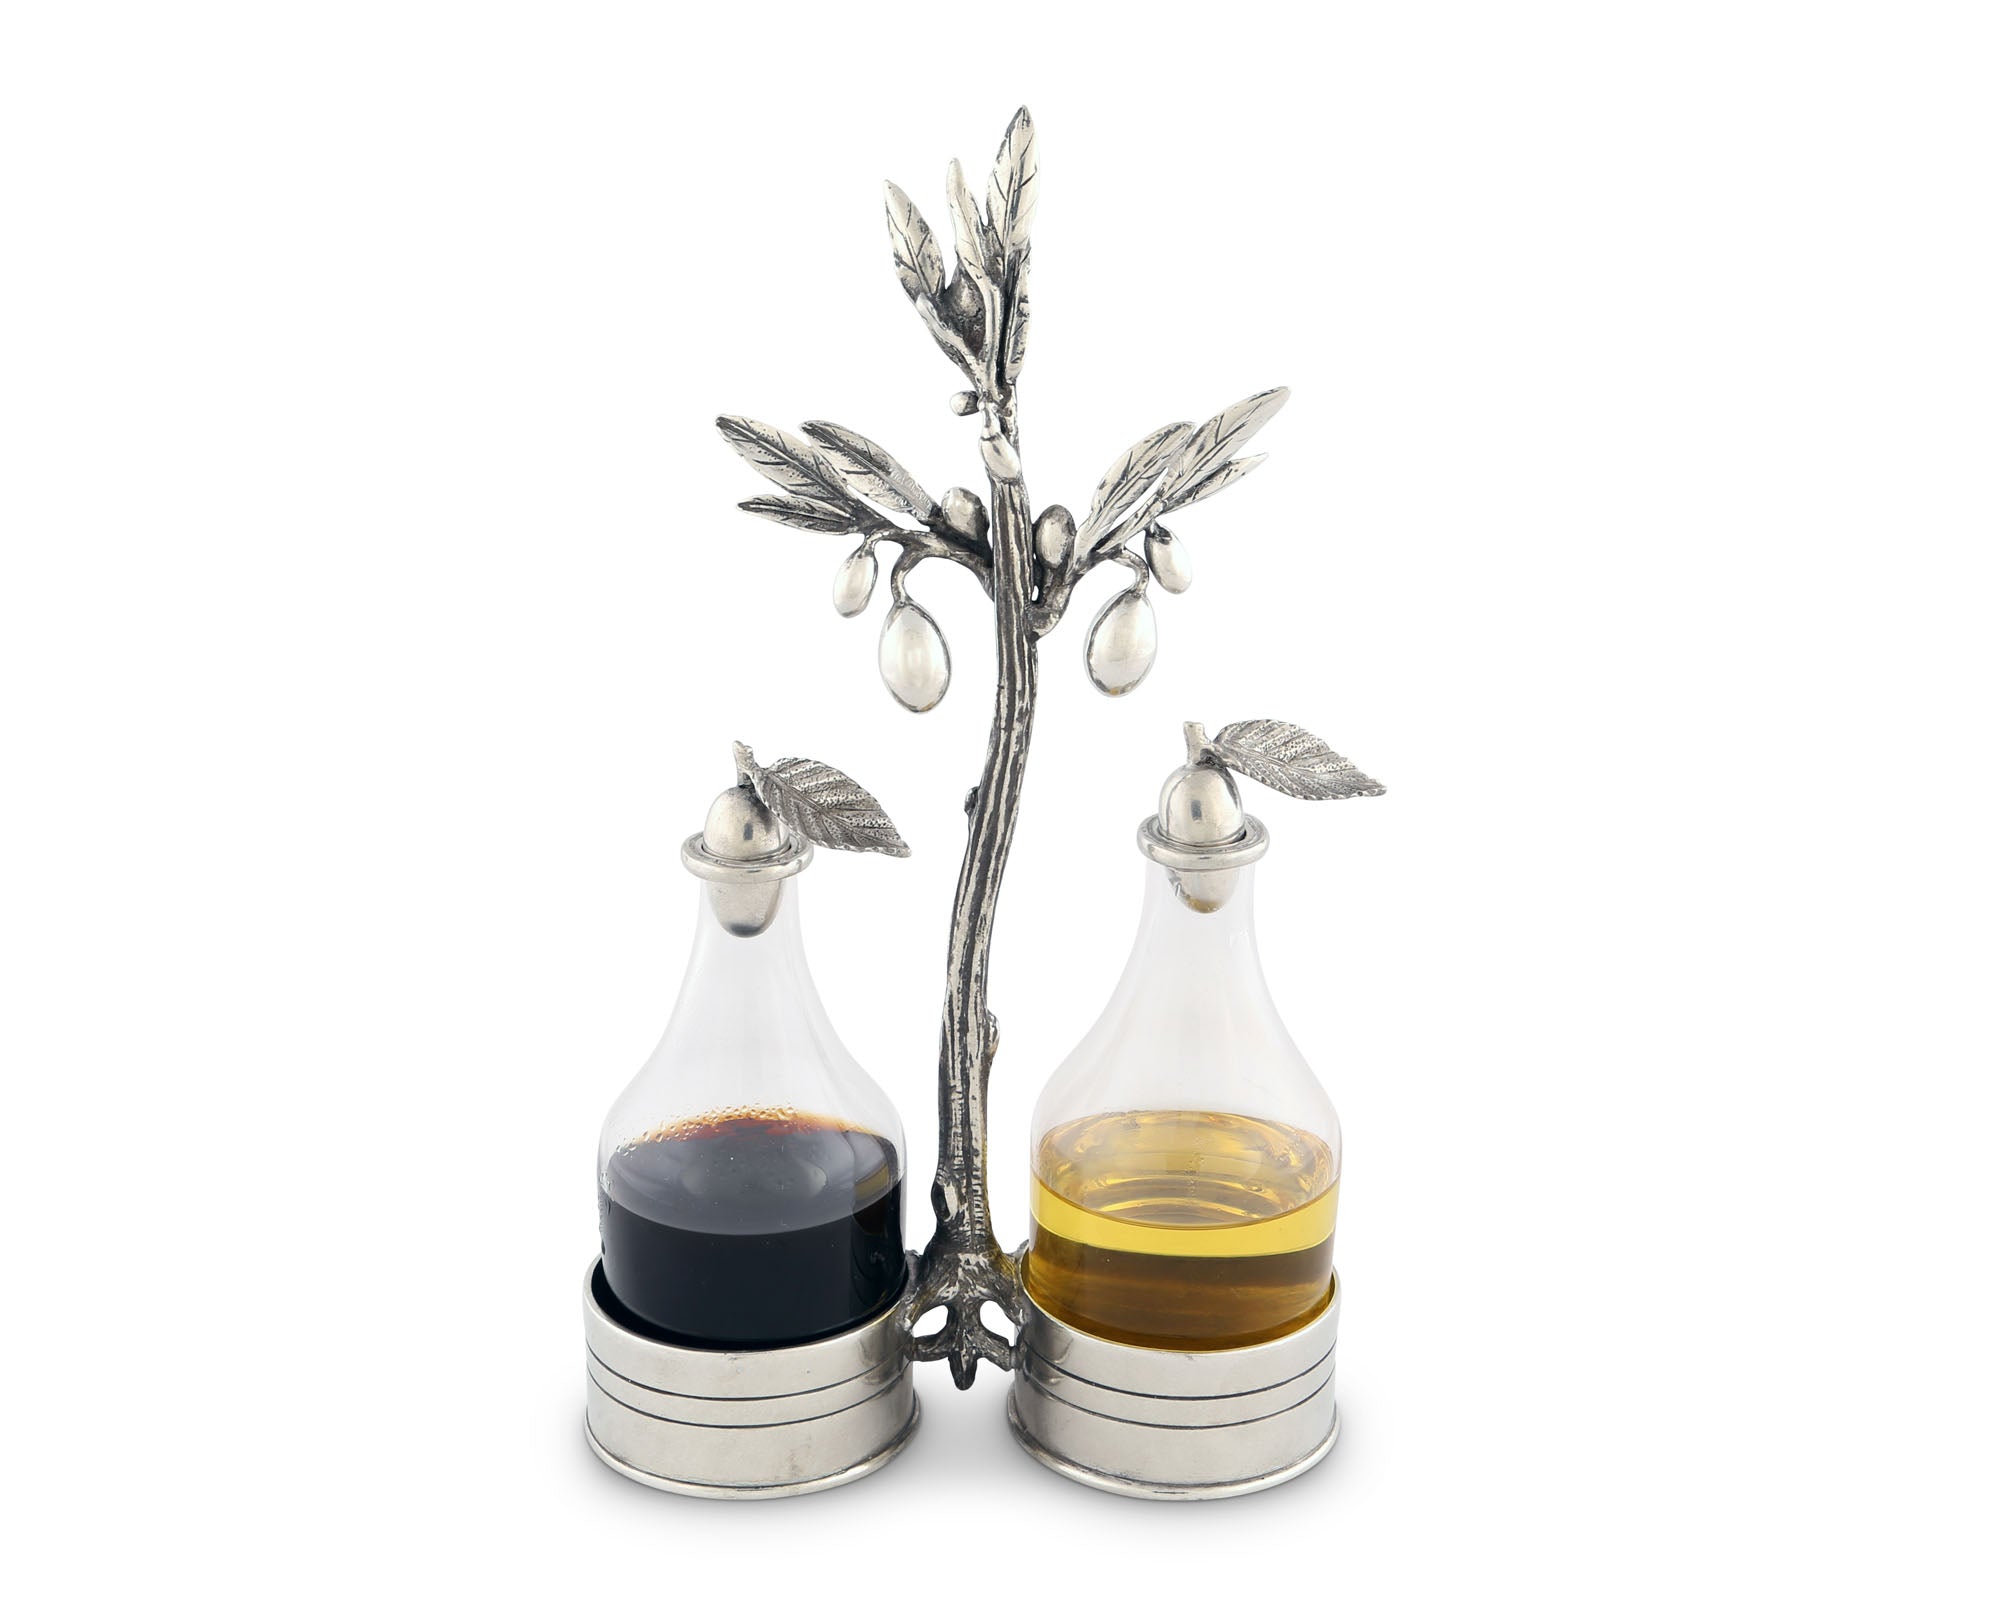 Vagabond House Olive Oil & Vinegar Set Product Image